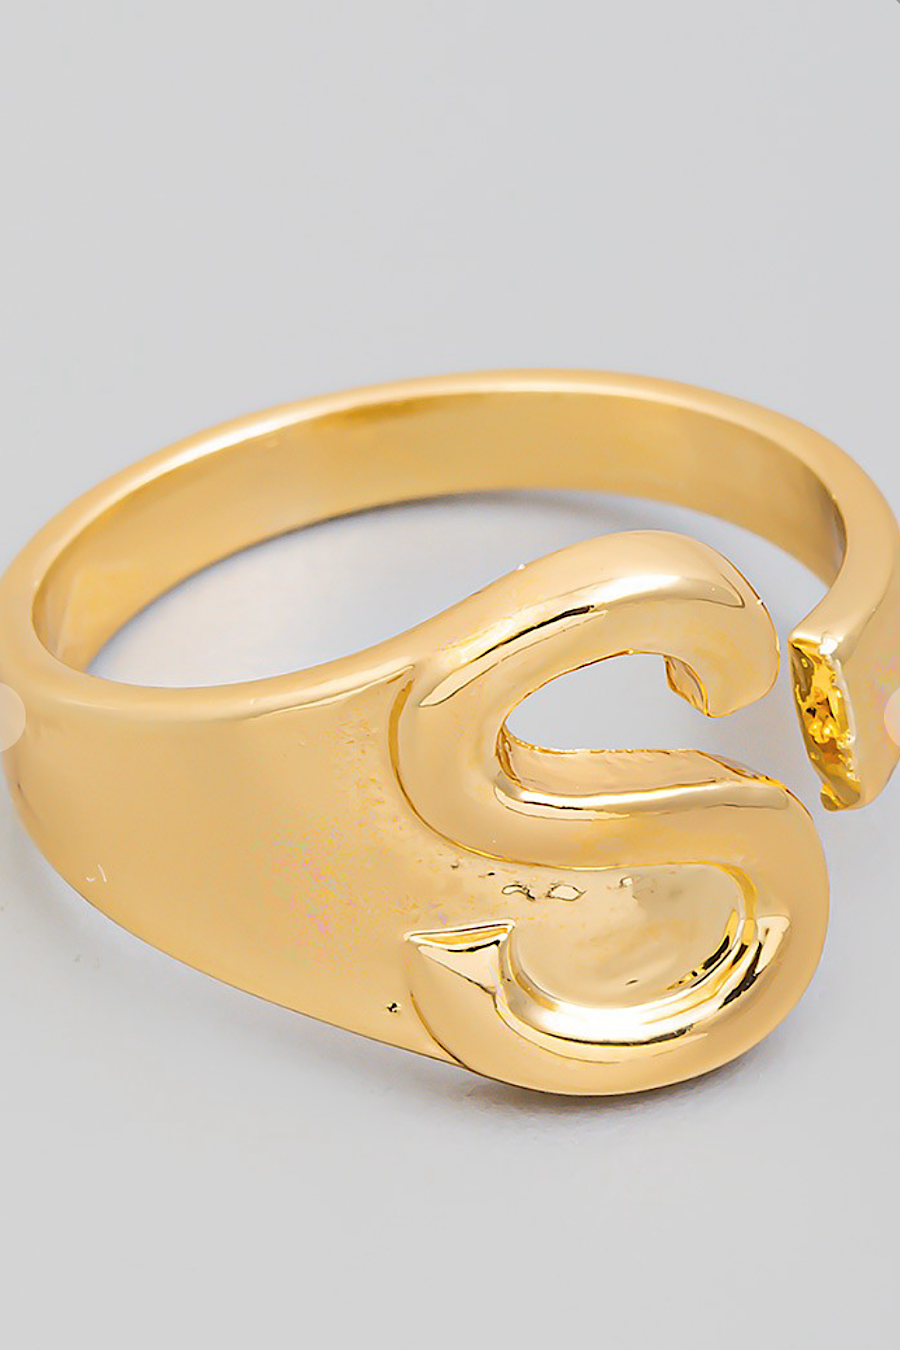 Initial Rings in Gold